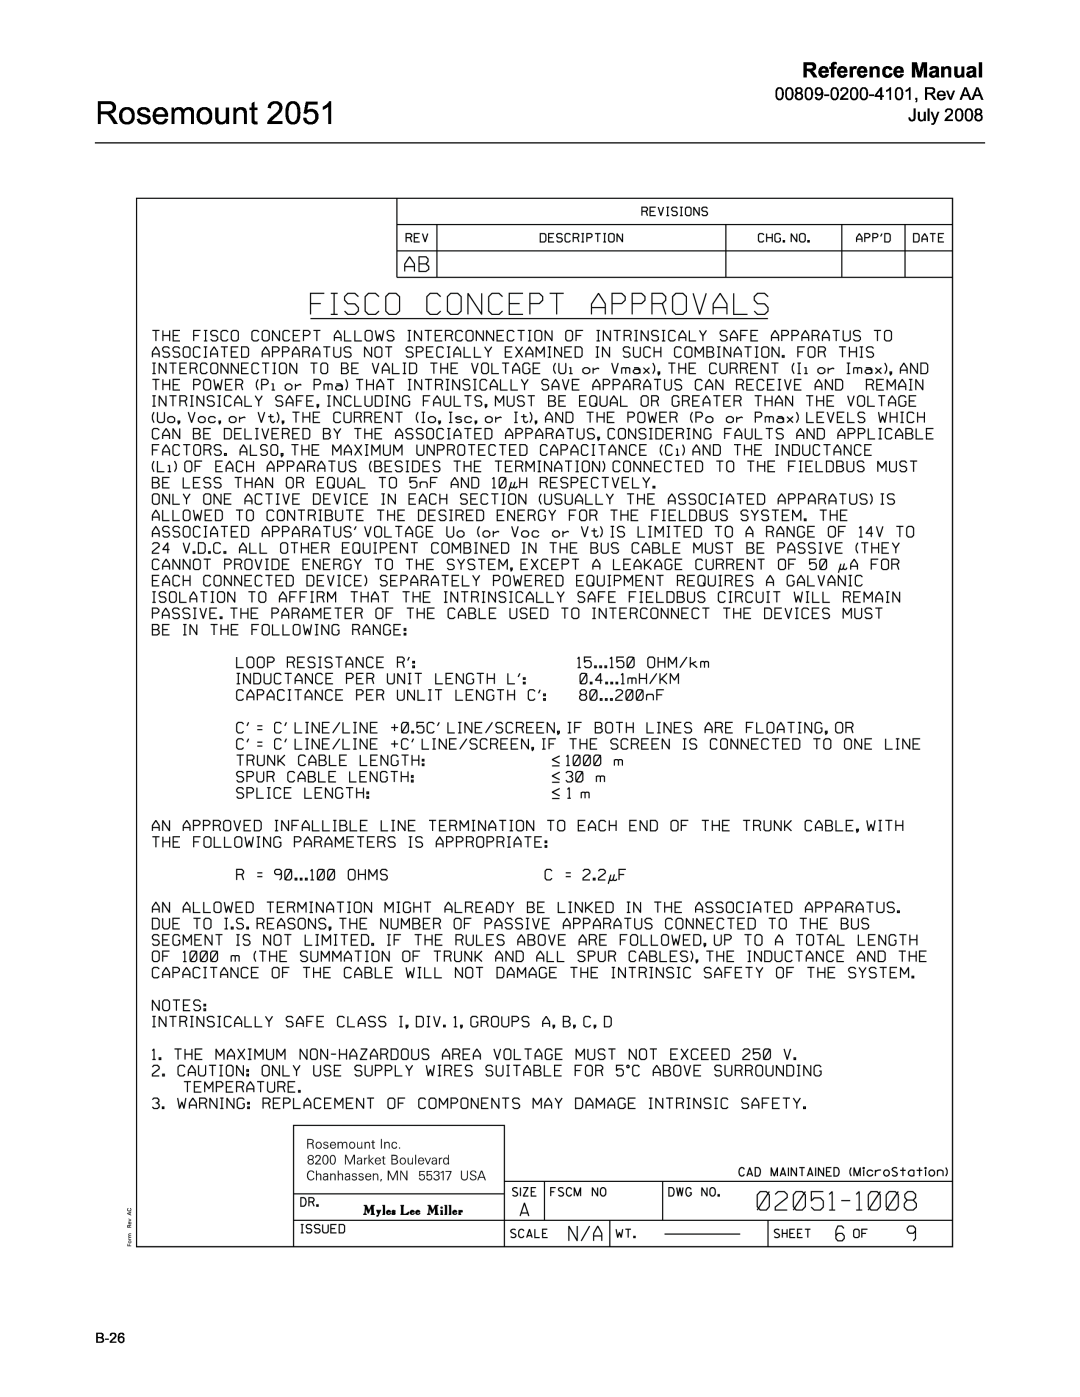 Emerson Process Management 2051 manual Rosemount, Reference Manual, B-26 